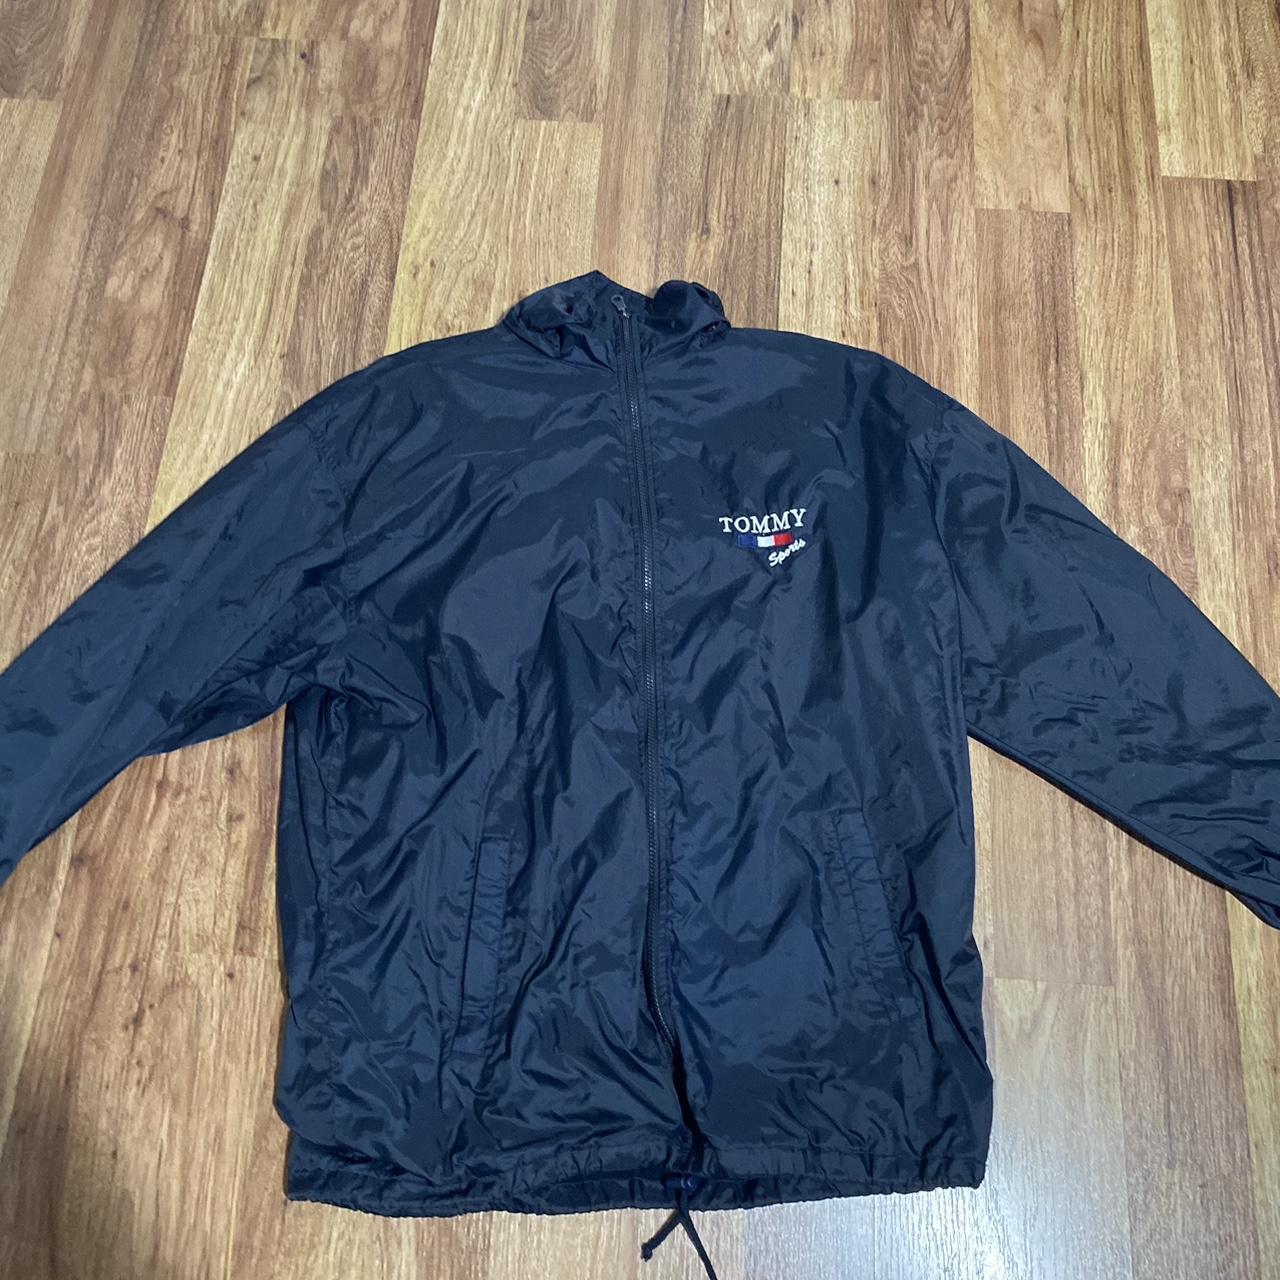 Tommy sports rain jacket - Depop